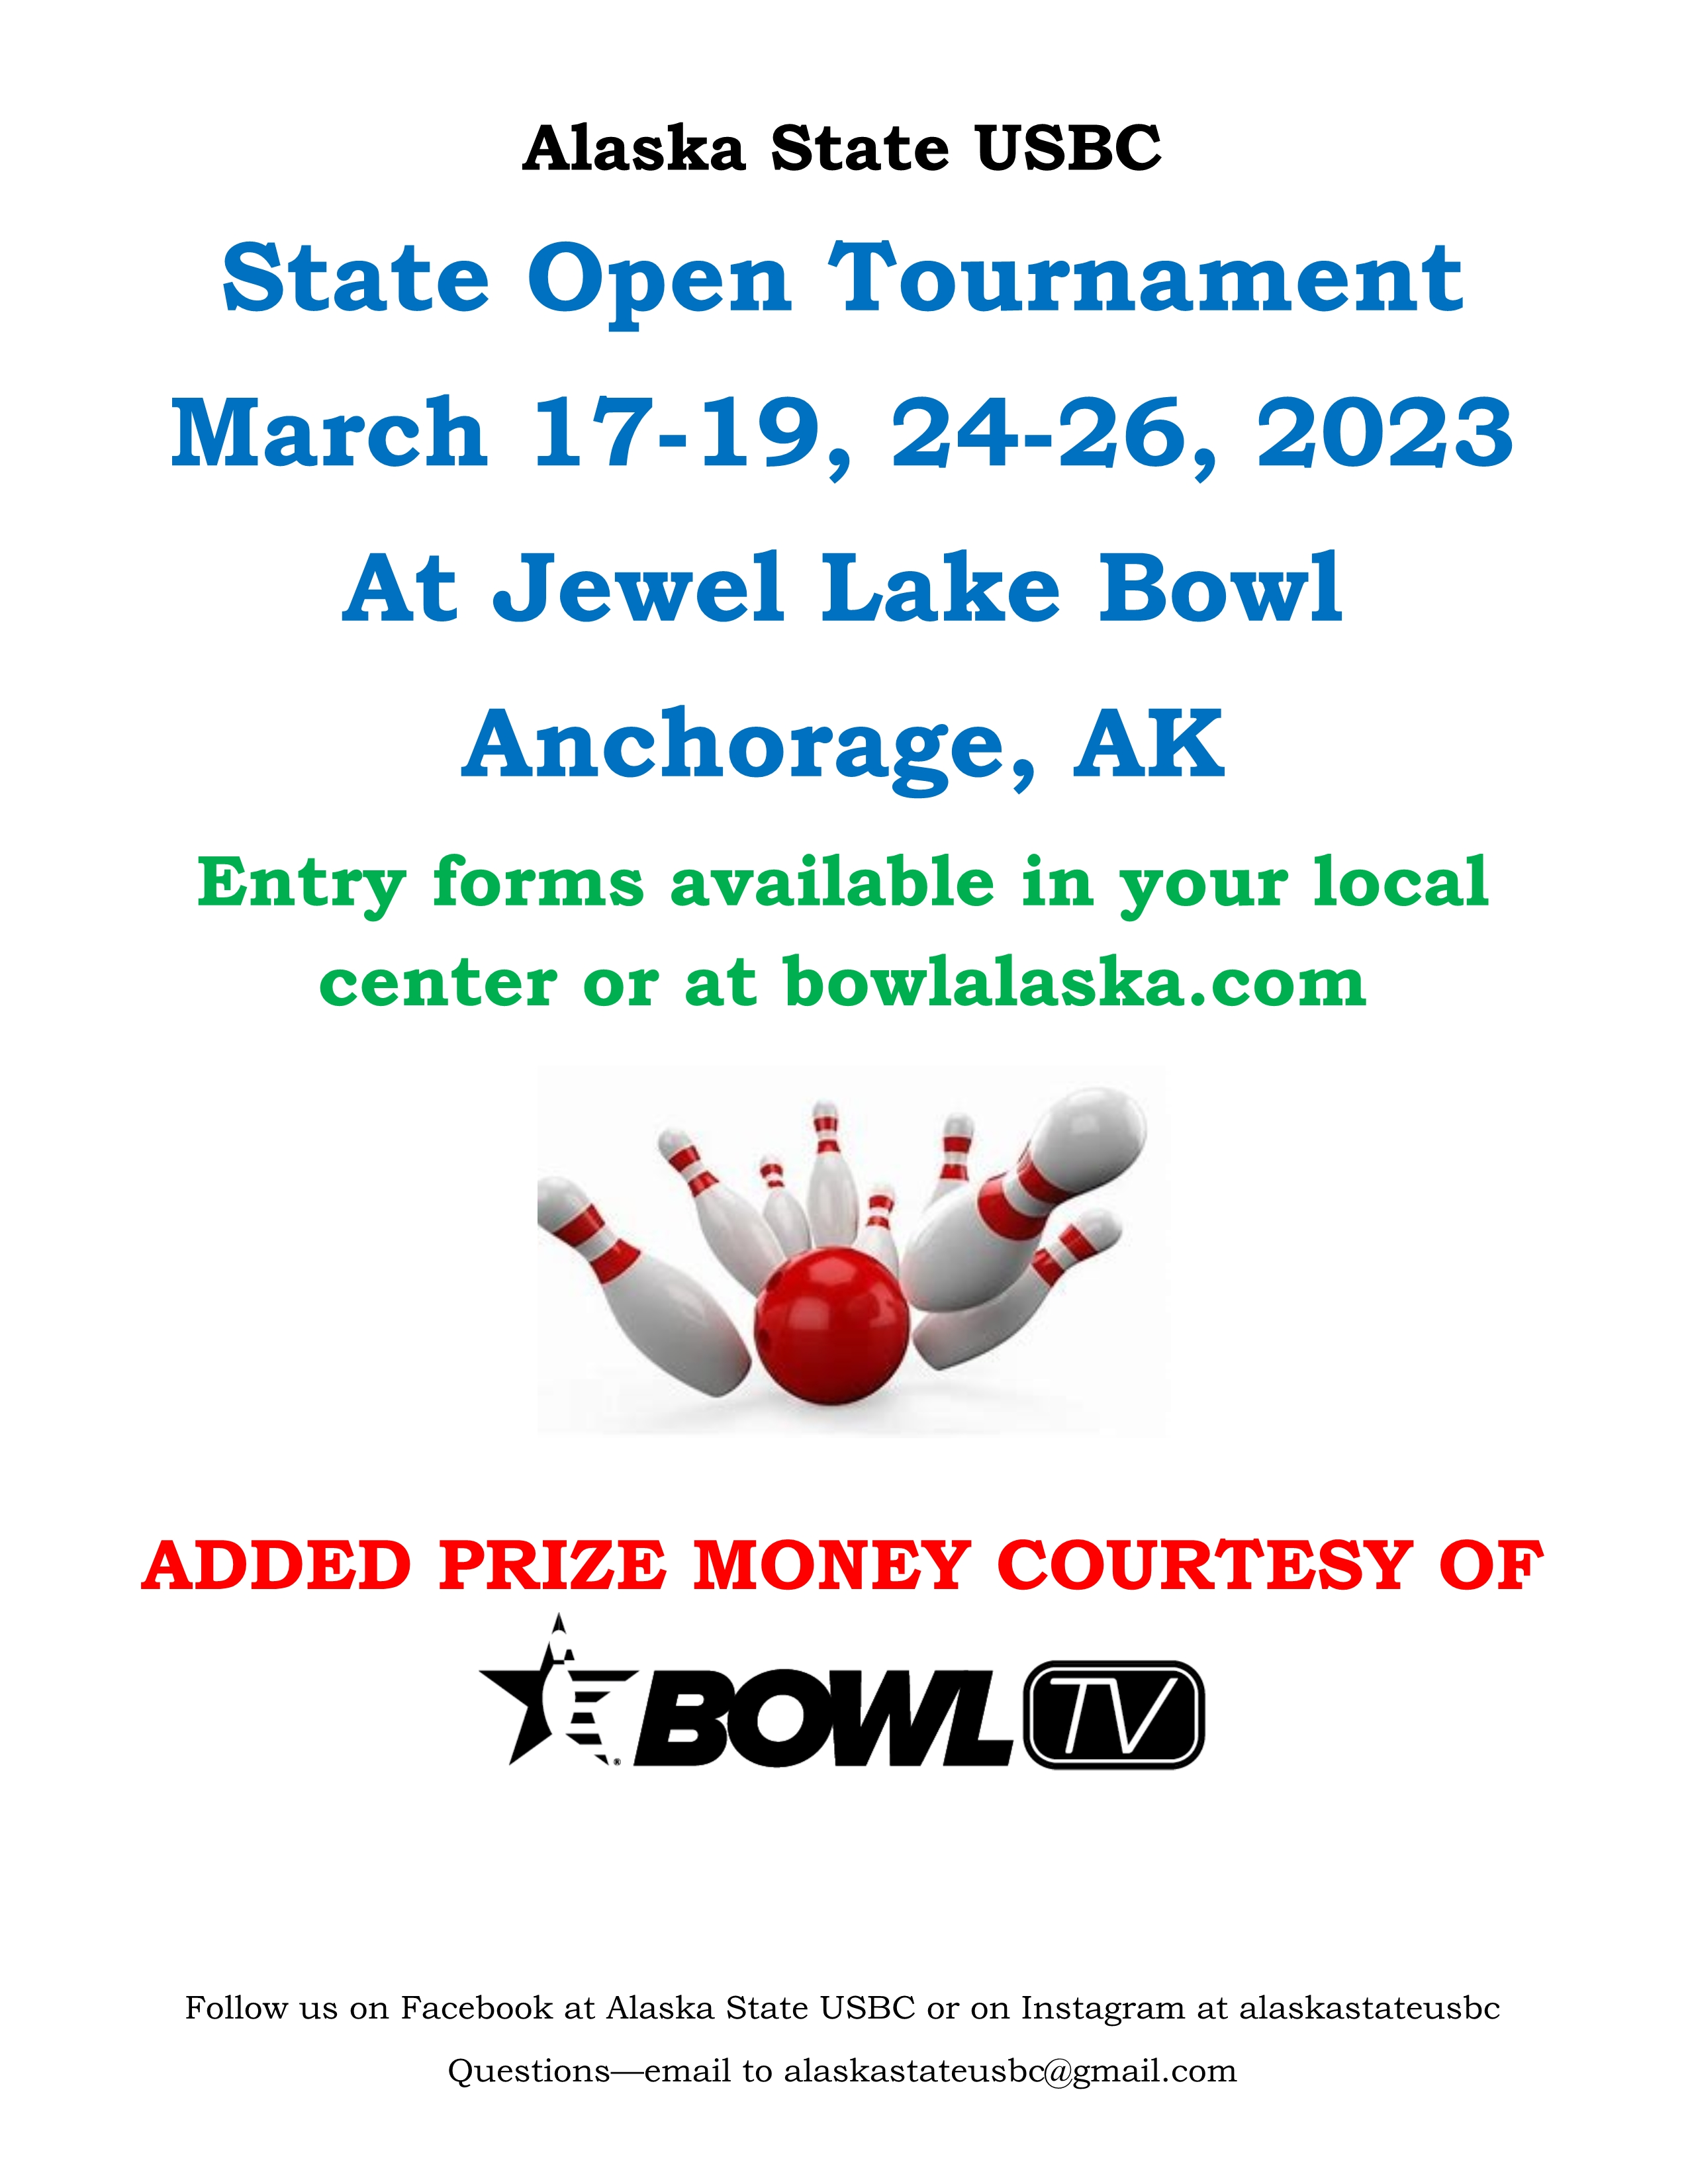 Alaska State Bowling Association